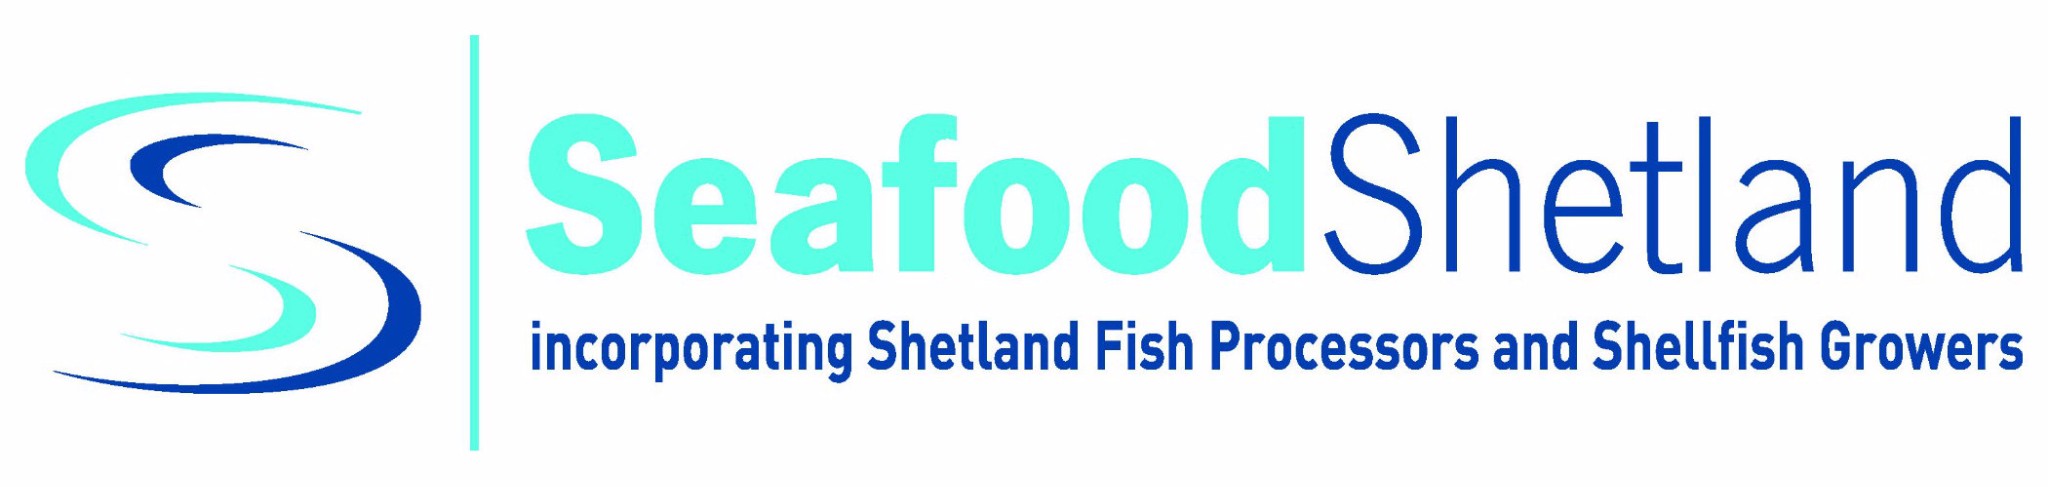 Seafood Shetland Logo